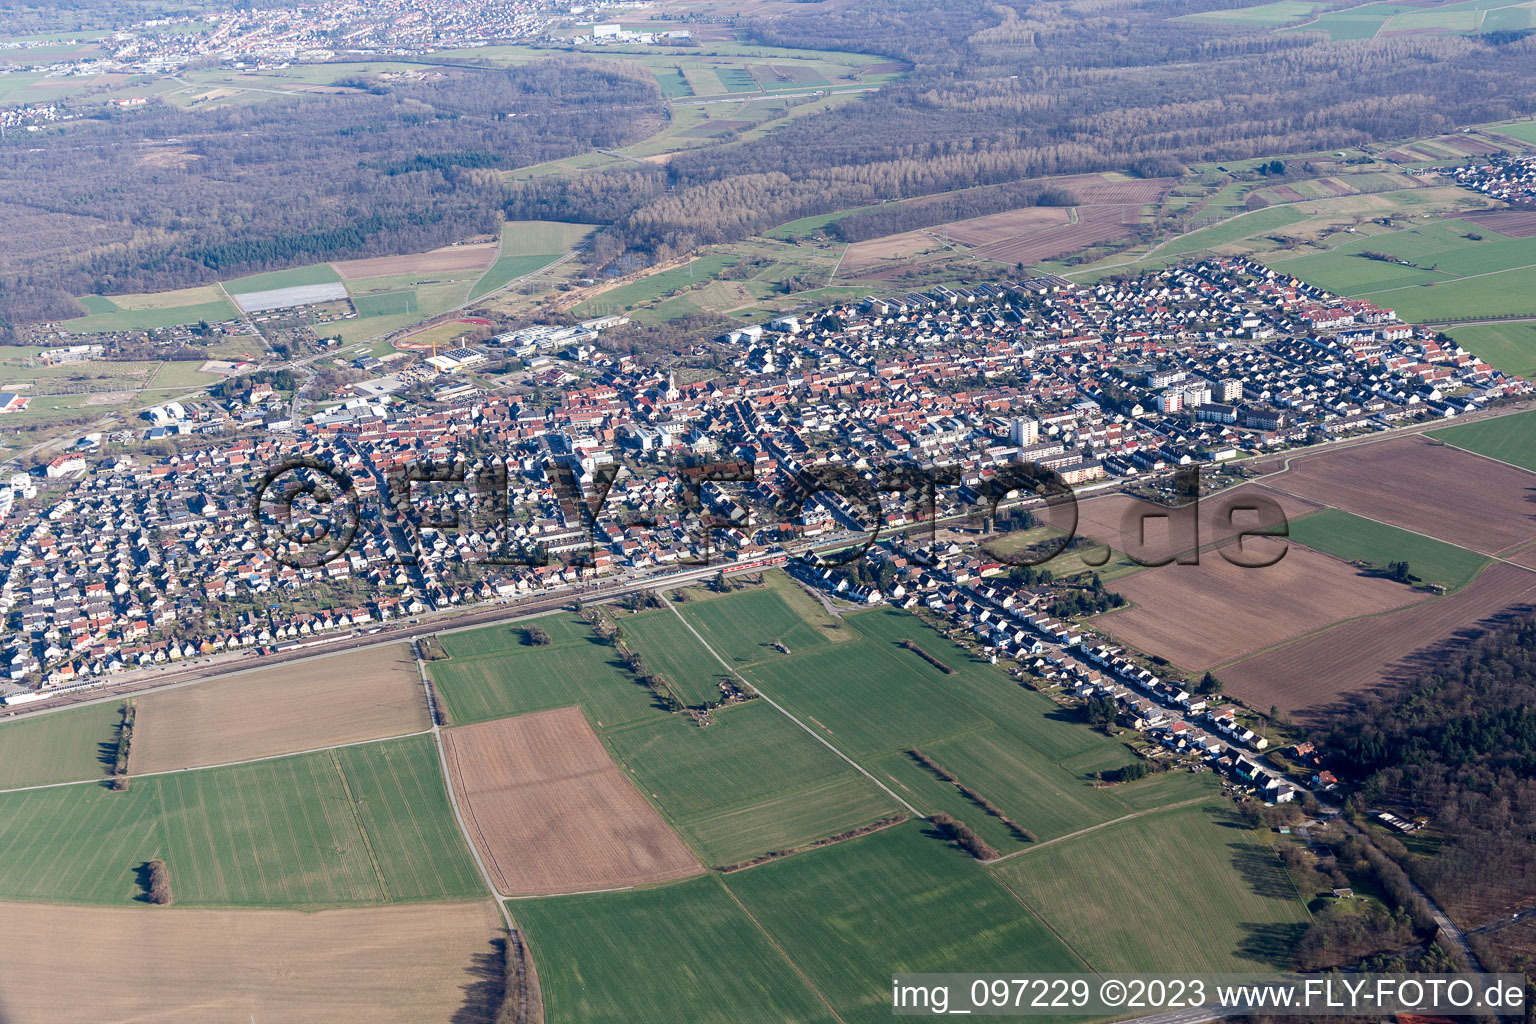 Bird's eye view of District Blankenloch in Stutensee in the state Baden-Wuerttemberg, Germany